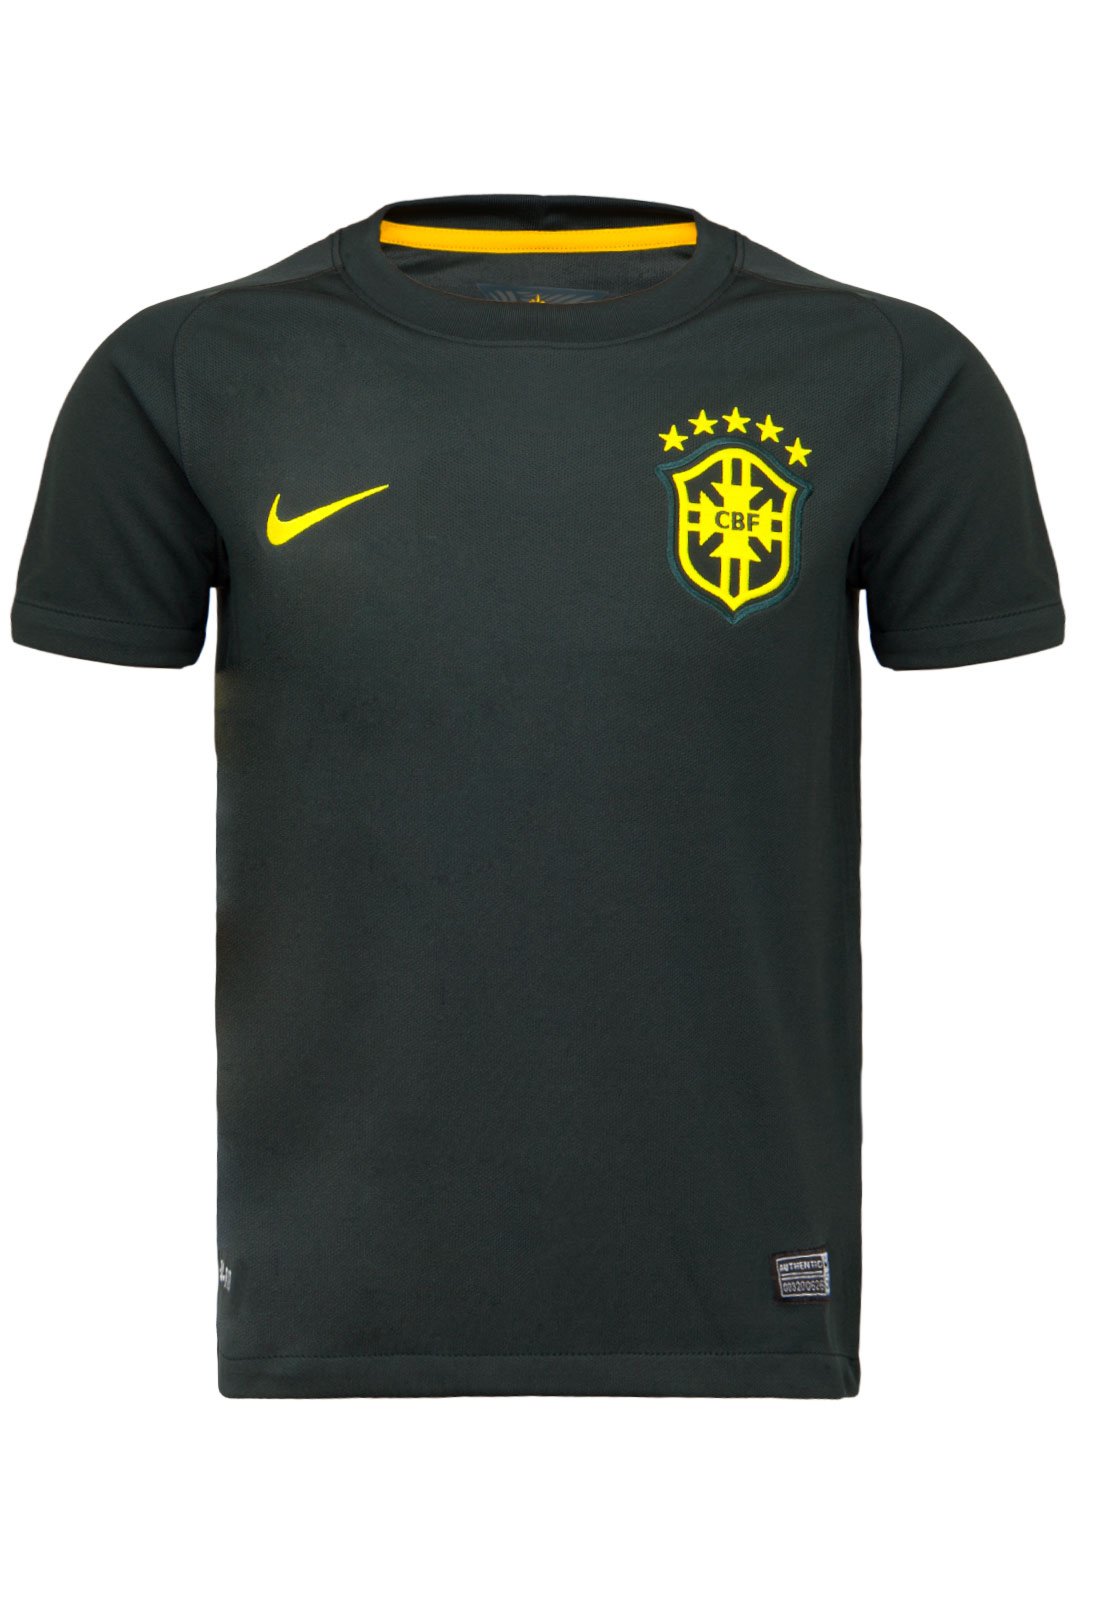 https://static.dafiti.com.br/p/Nike-Camisa-Nike-CBF-Brasil-Infantil-SS-3RD-Stadium-Torcedor-Verde-1216-7790141-1-zoom.jpg